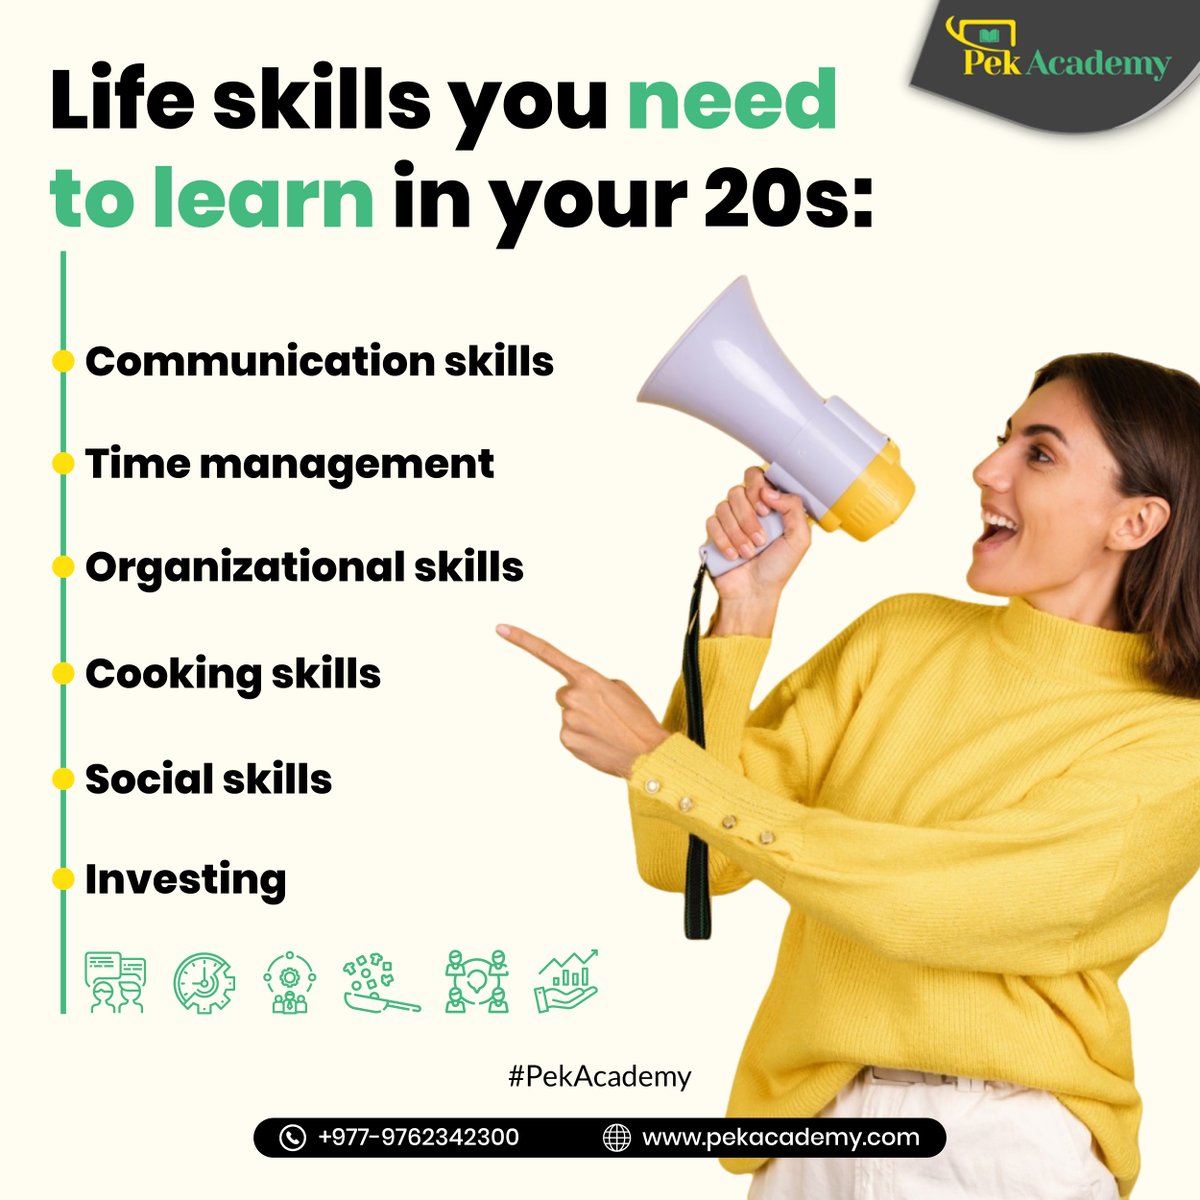 Life skills you need to learn in your 20s!

#PekAcademy #PekFamily #Pek #MajjaleyBujincha #Learning #Learn #Life #Skill #Skills #LifeSkills #Communication #TimeManagement #OrganizationalSkill #Cooking #SocialSkill #Investing #Sankhamul #Kathmandu #Nepal